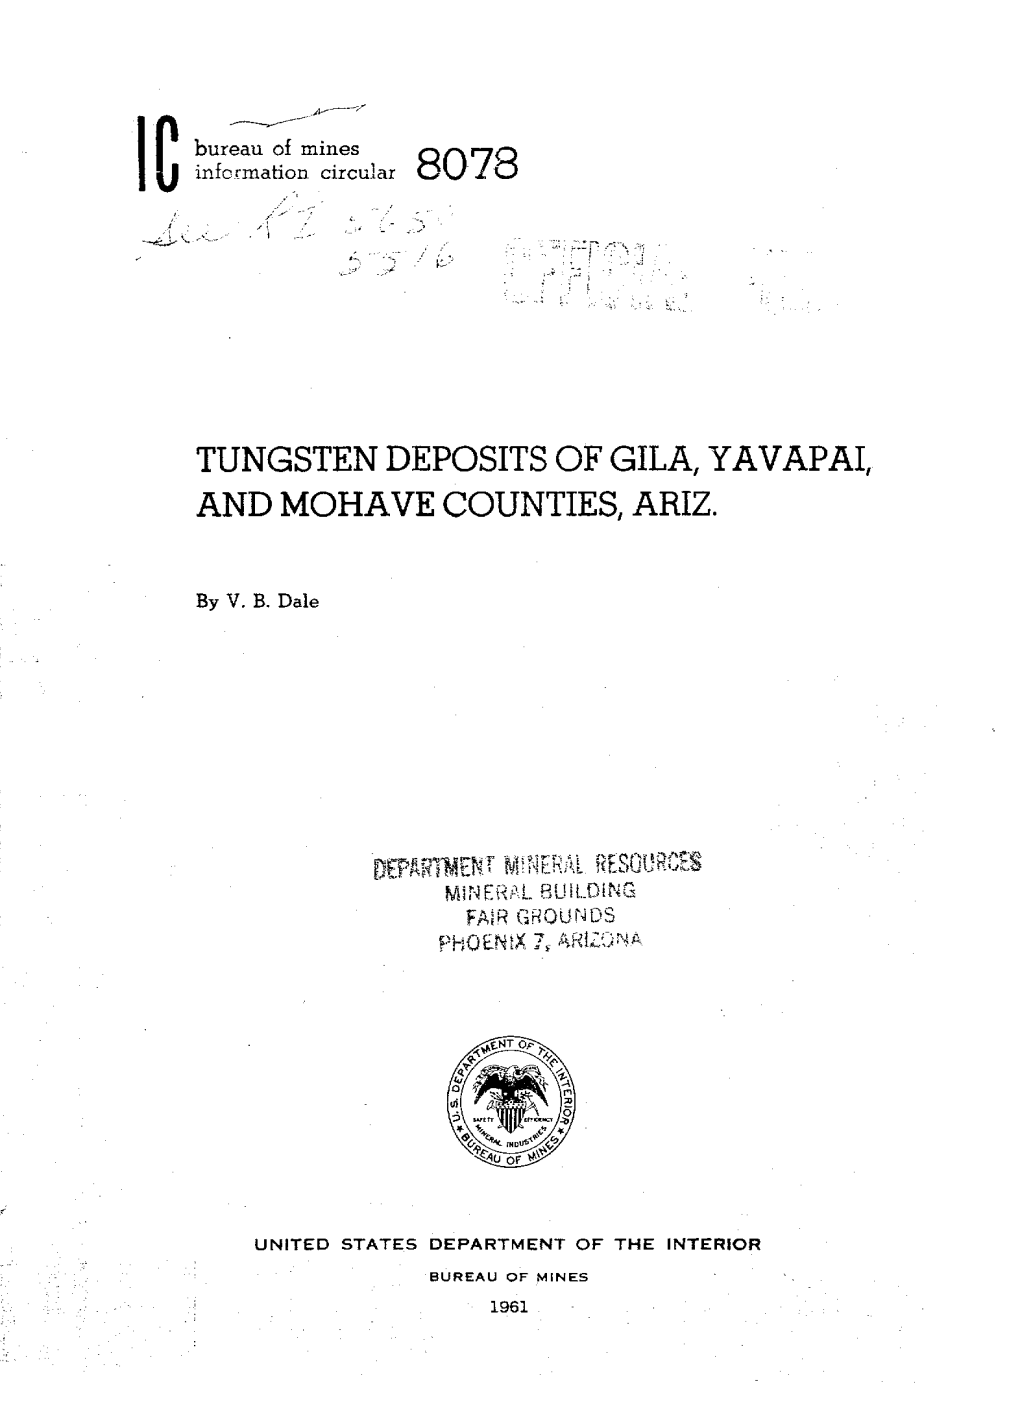 Tungsten Deposits of Gila, Yavapai, and Mohave Counties, Arizona I.C